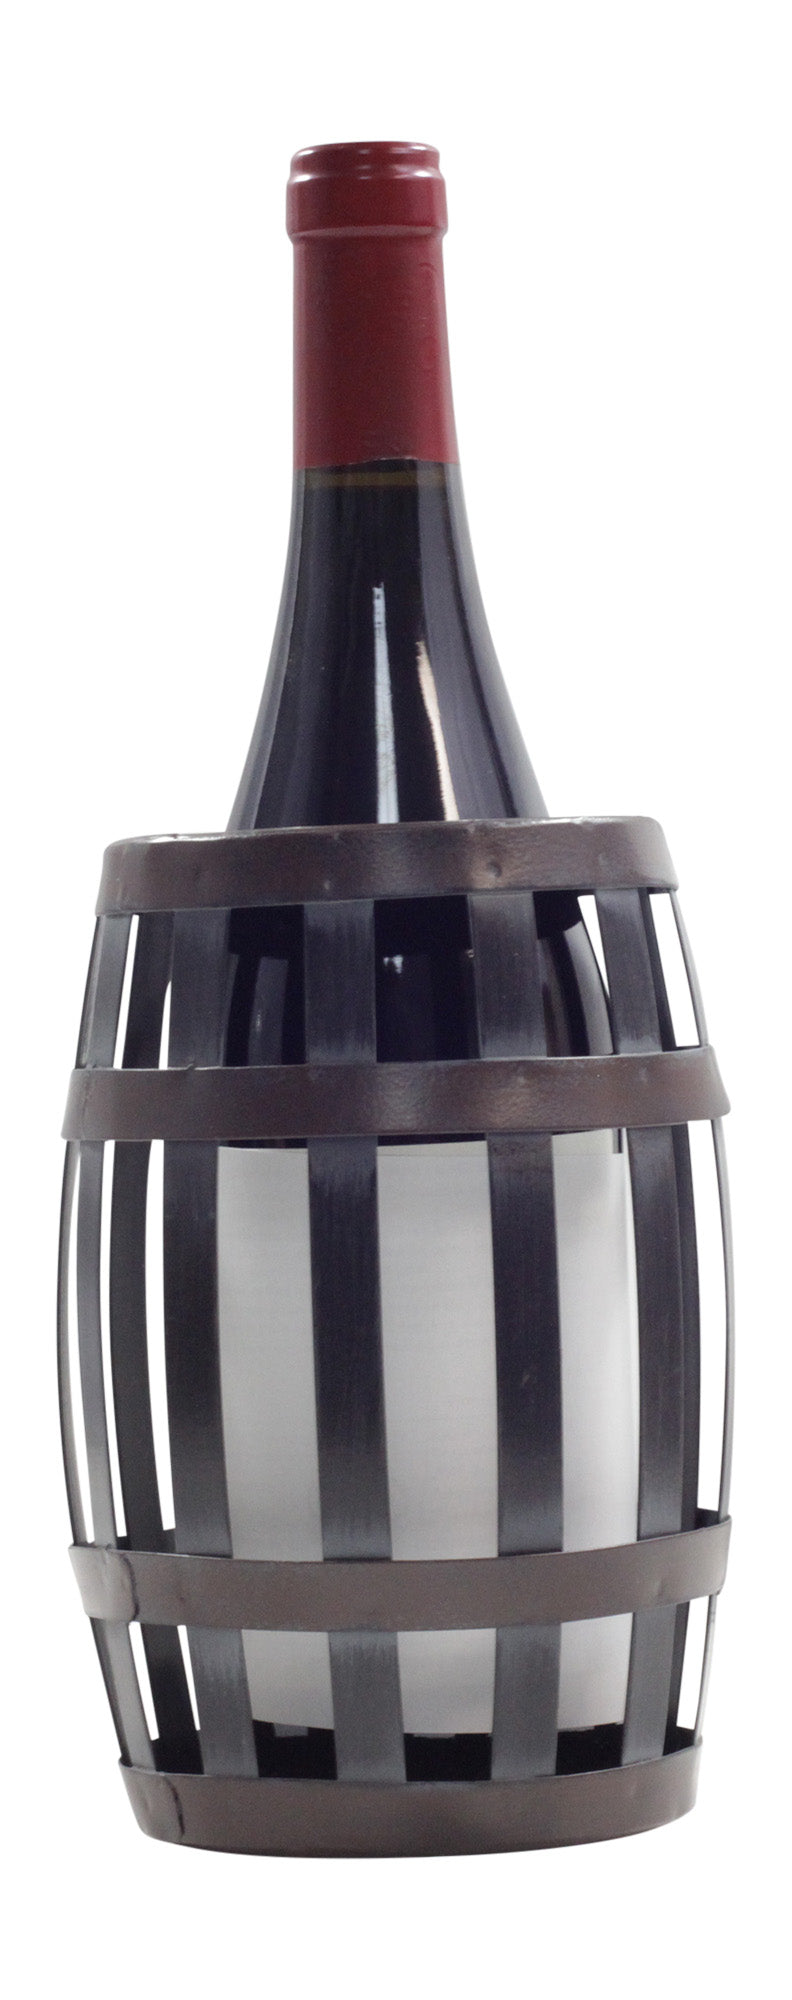 Wine Barrel - Made Easy Kit Wine Bottle Display Holder Rack - Premium Setting Home Sculpture Statute - Metal Tabletop Functional Farmhouse Décor